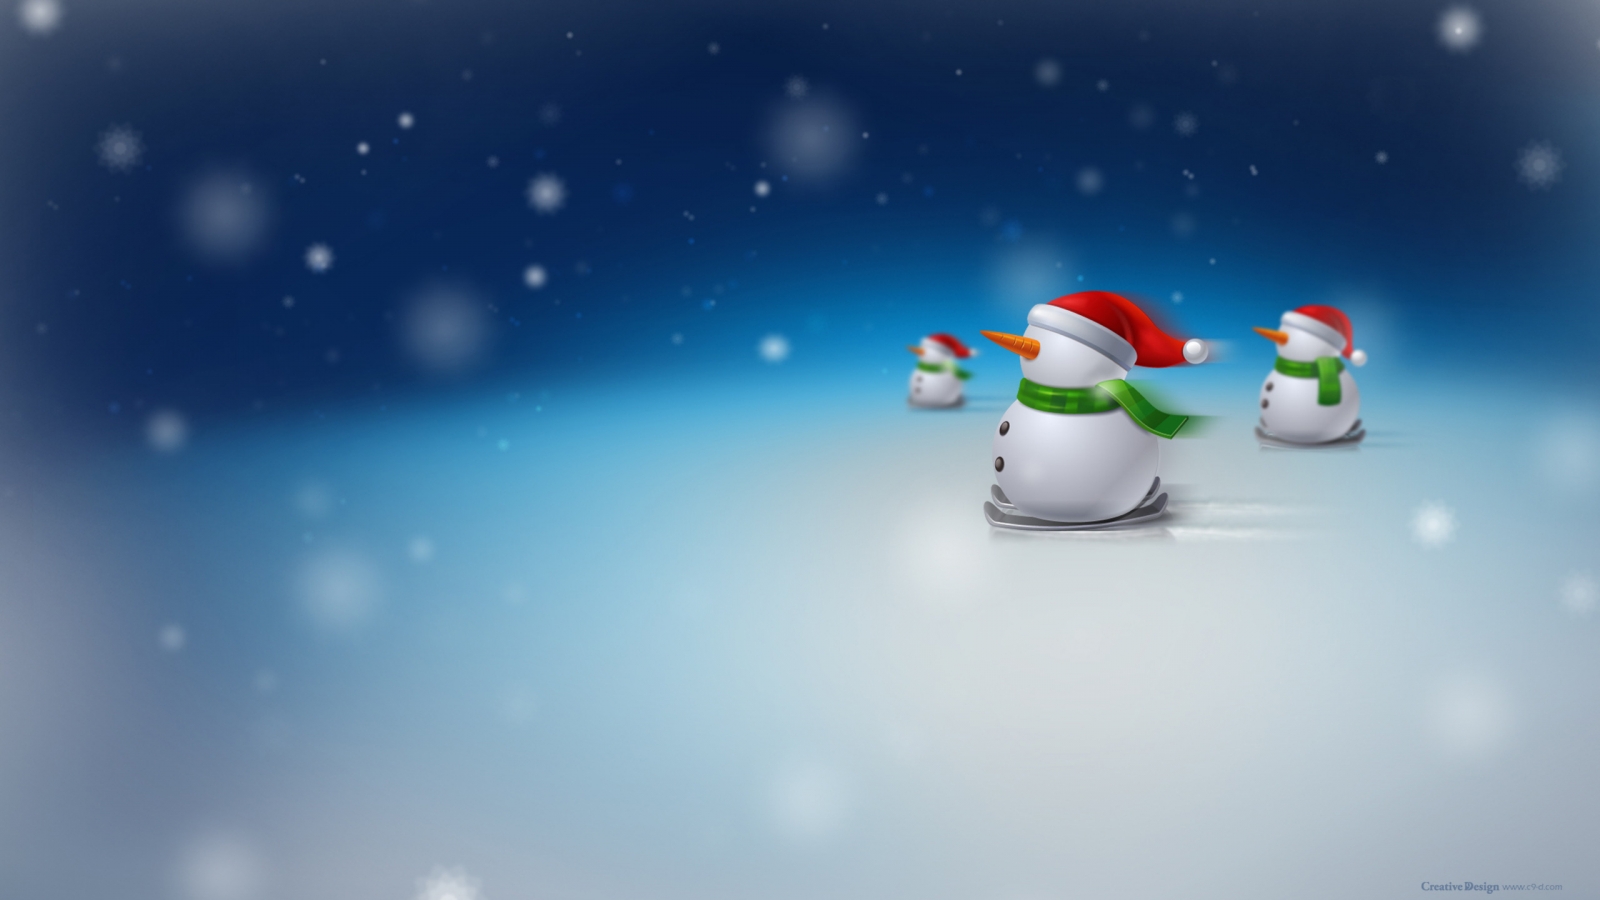 Snowman for 1600 x 900 HDTV resolution